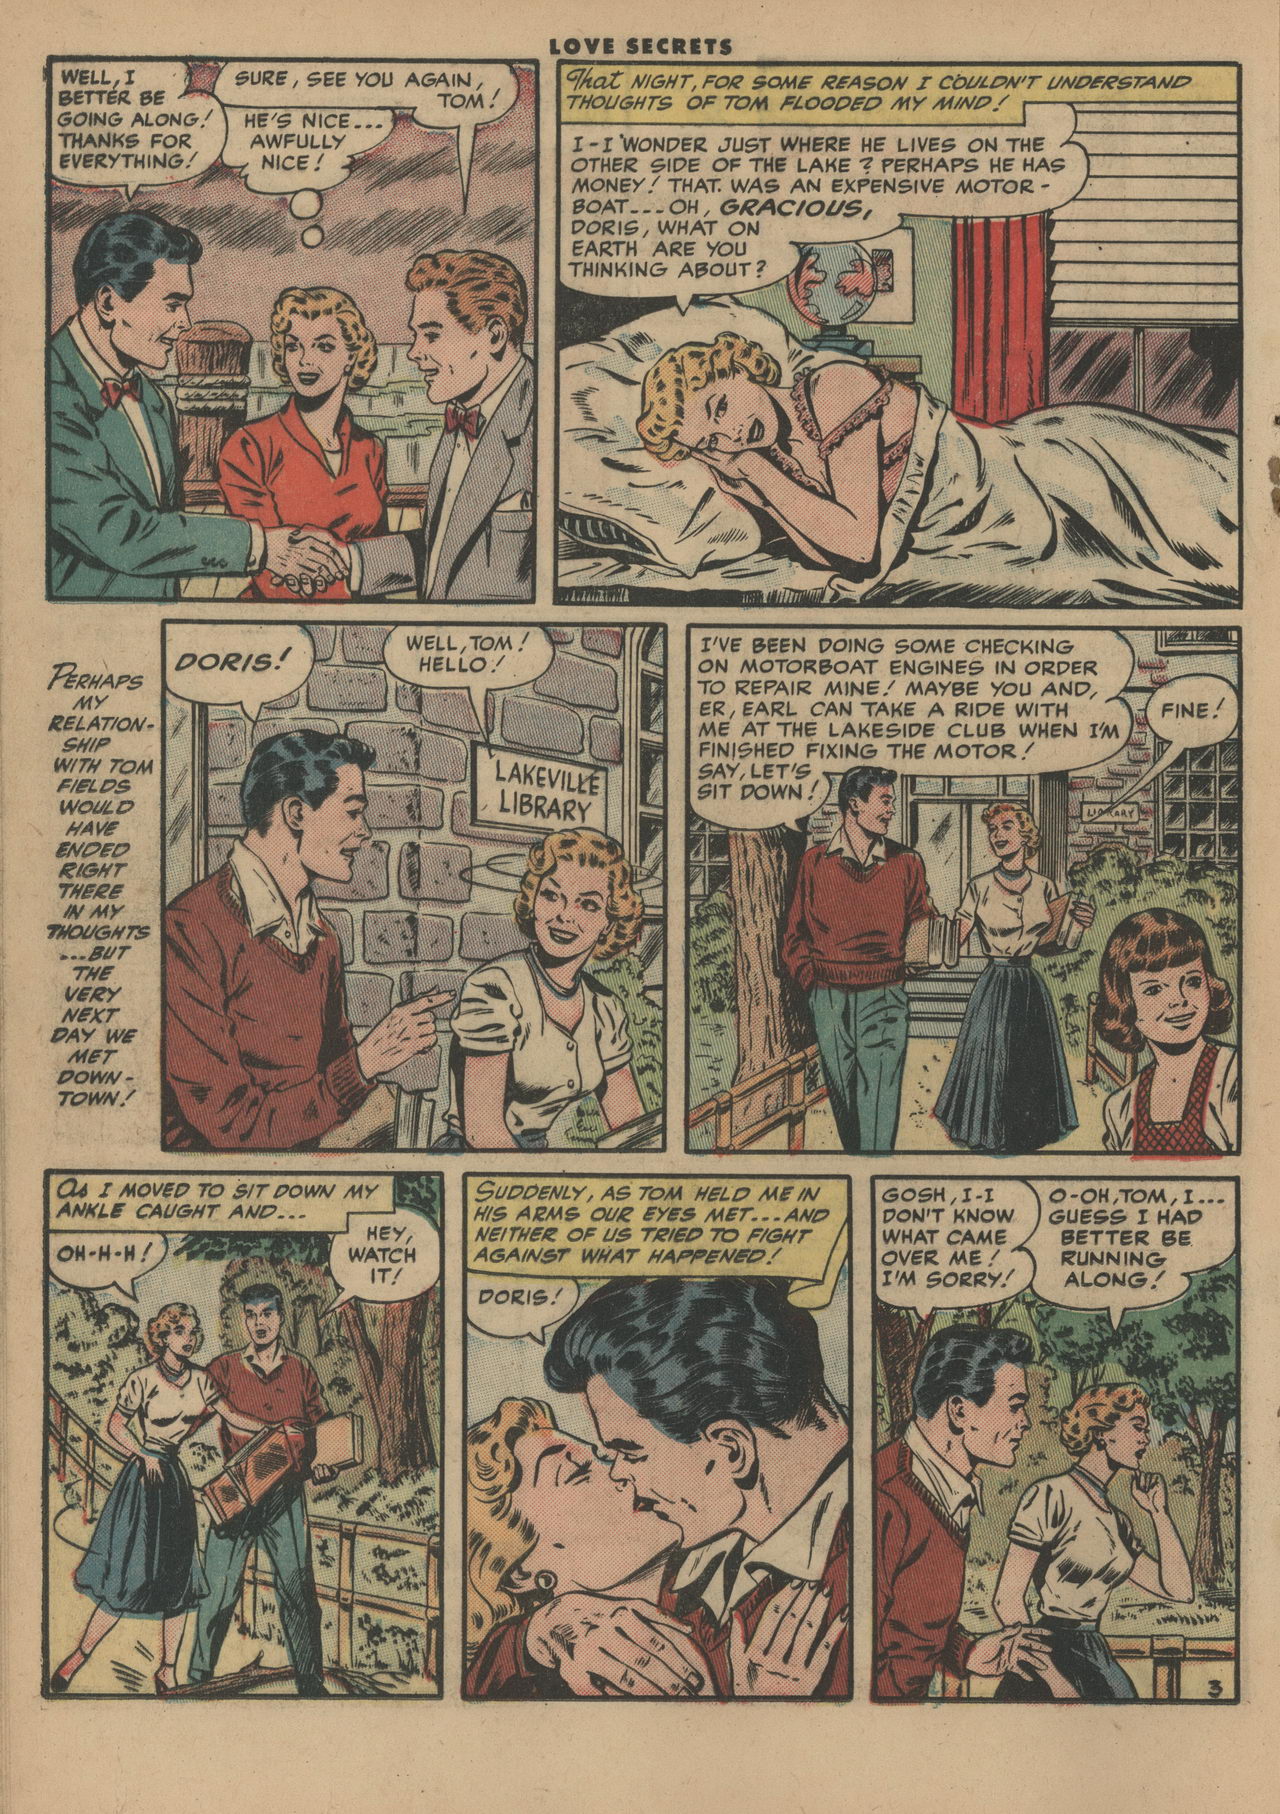 Read online Love Secrets (1953) comic -  Issue #41 - 20